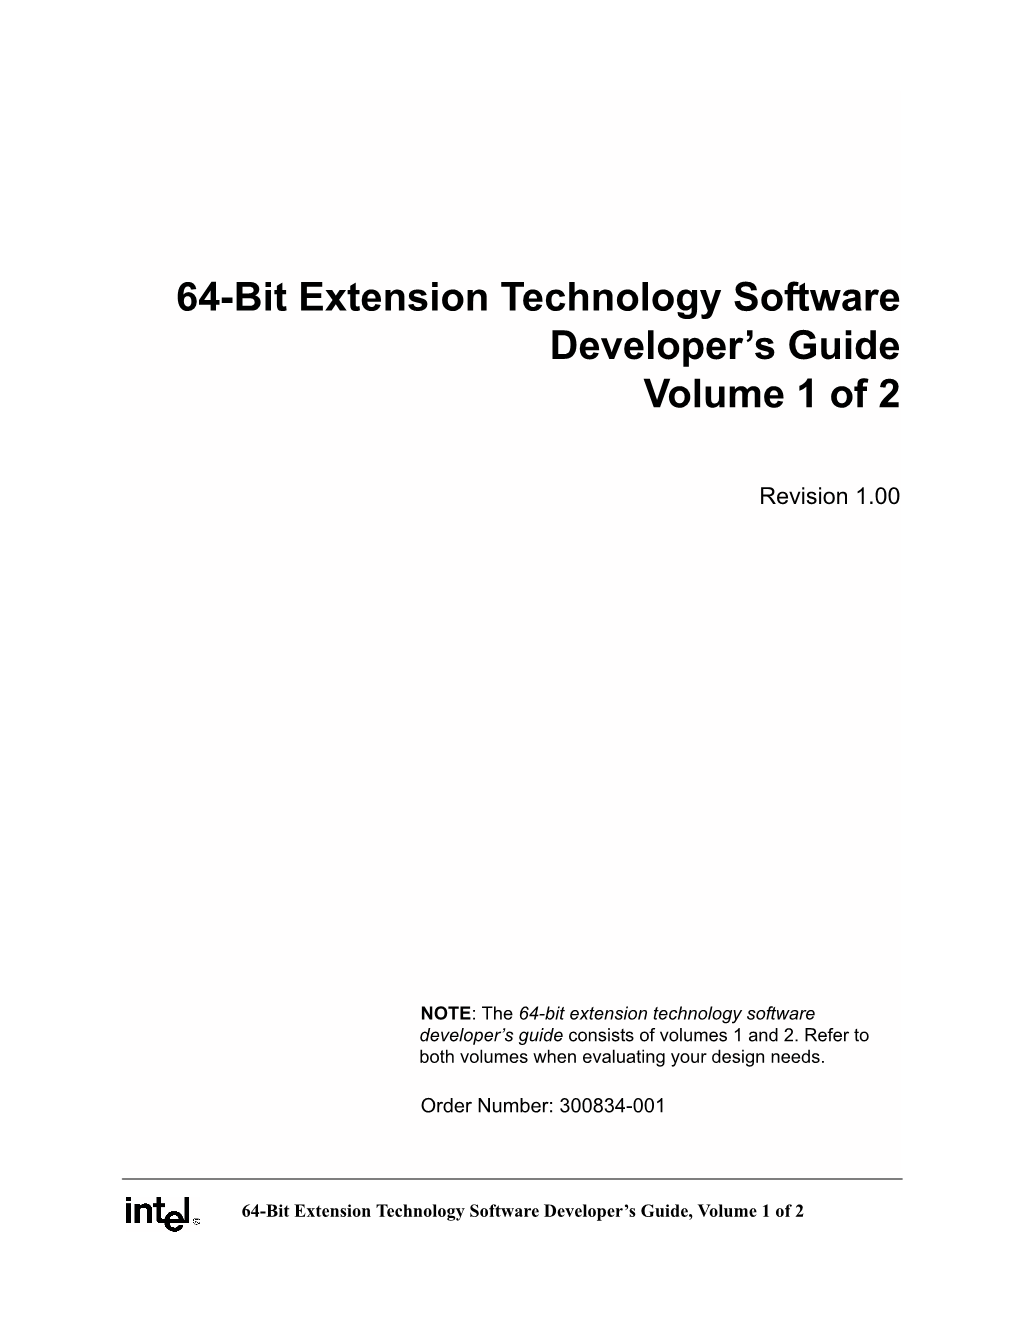 64-Bit Extension Technology Software Developer's Guide Volume 1 of 2